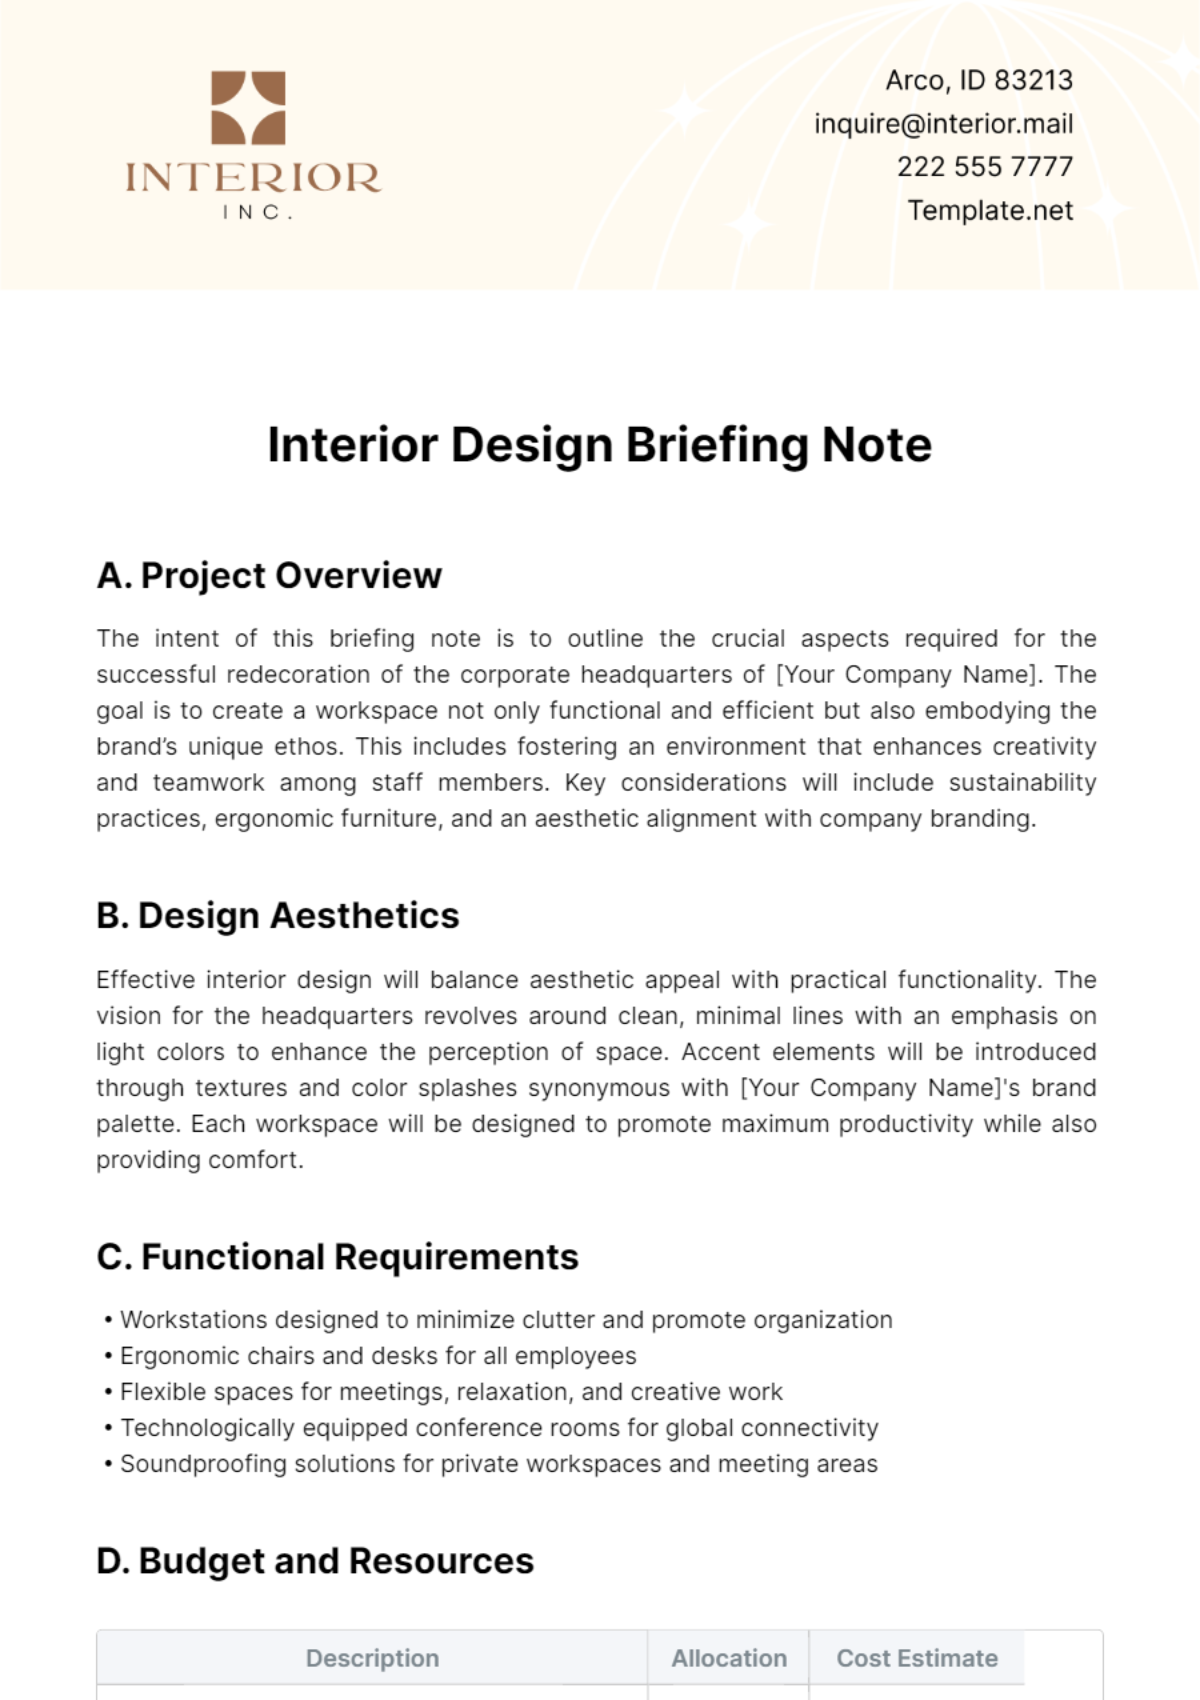 Interior Design Briefing Note Template